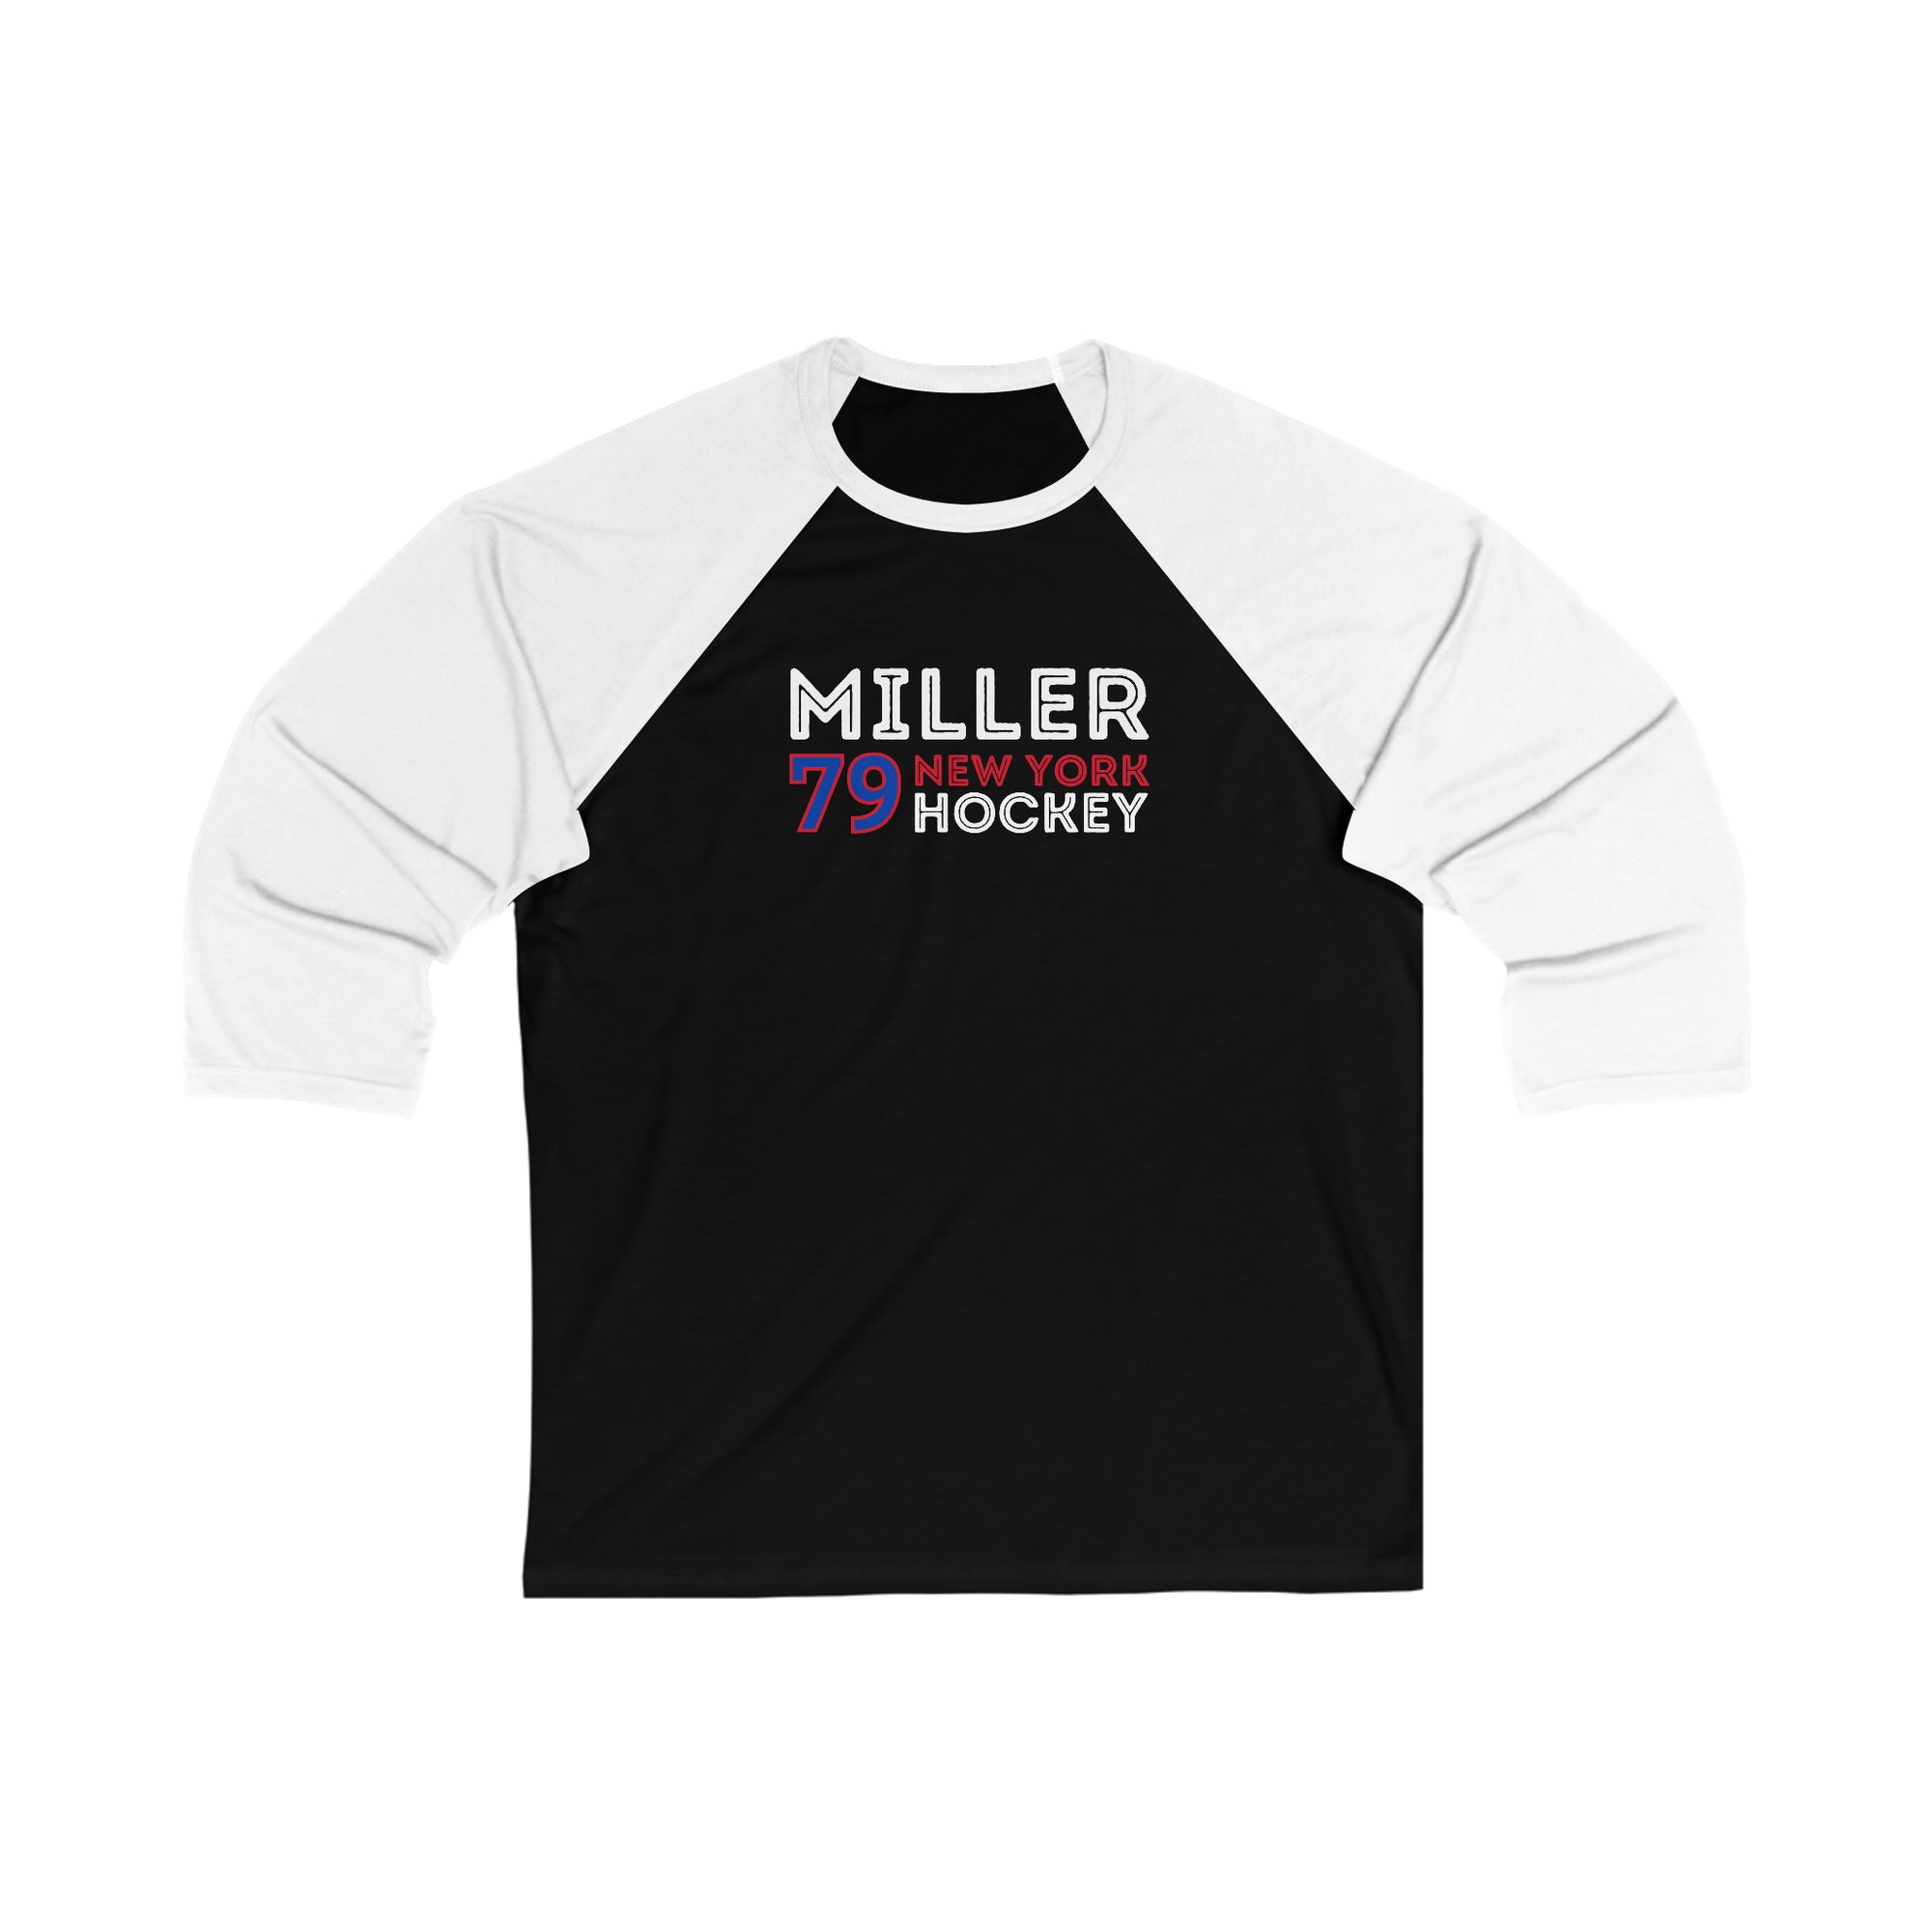 K'Andre Miller - New York Teams Store